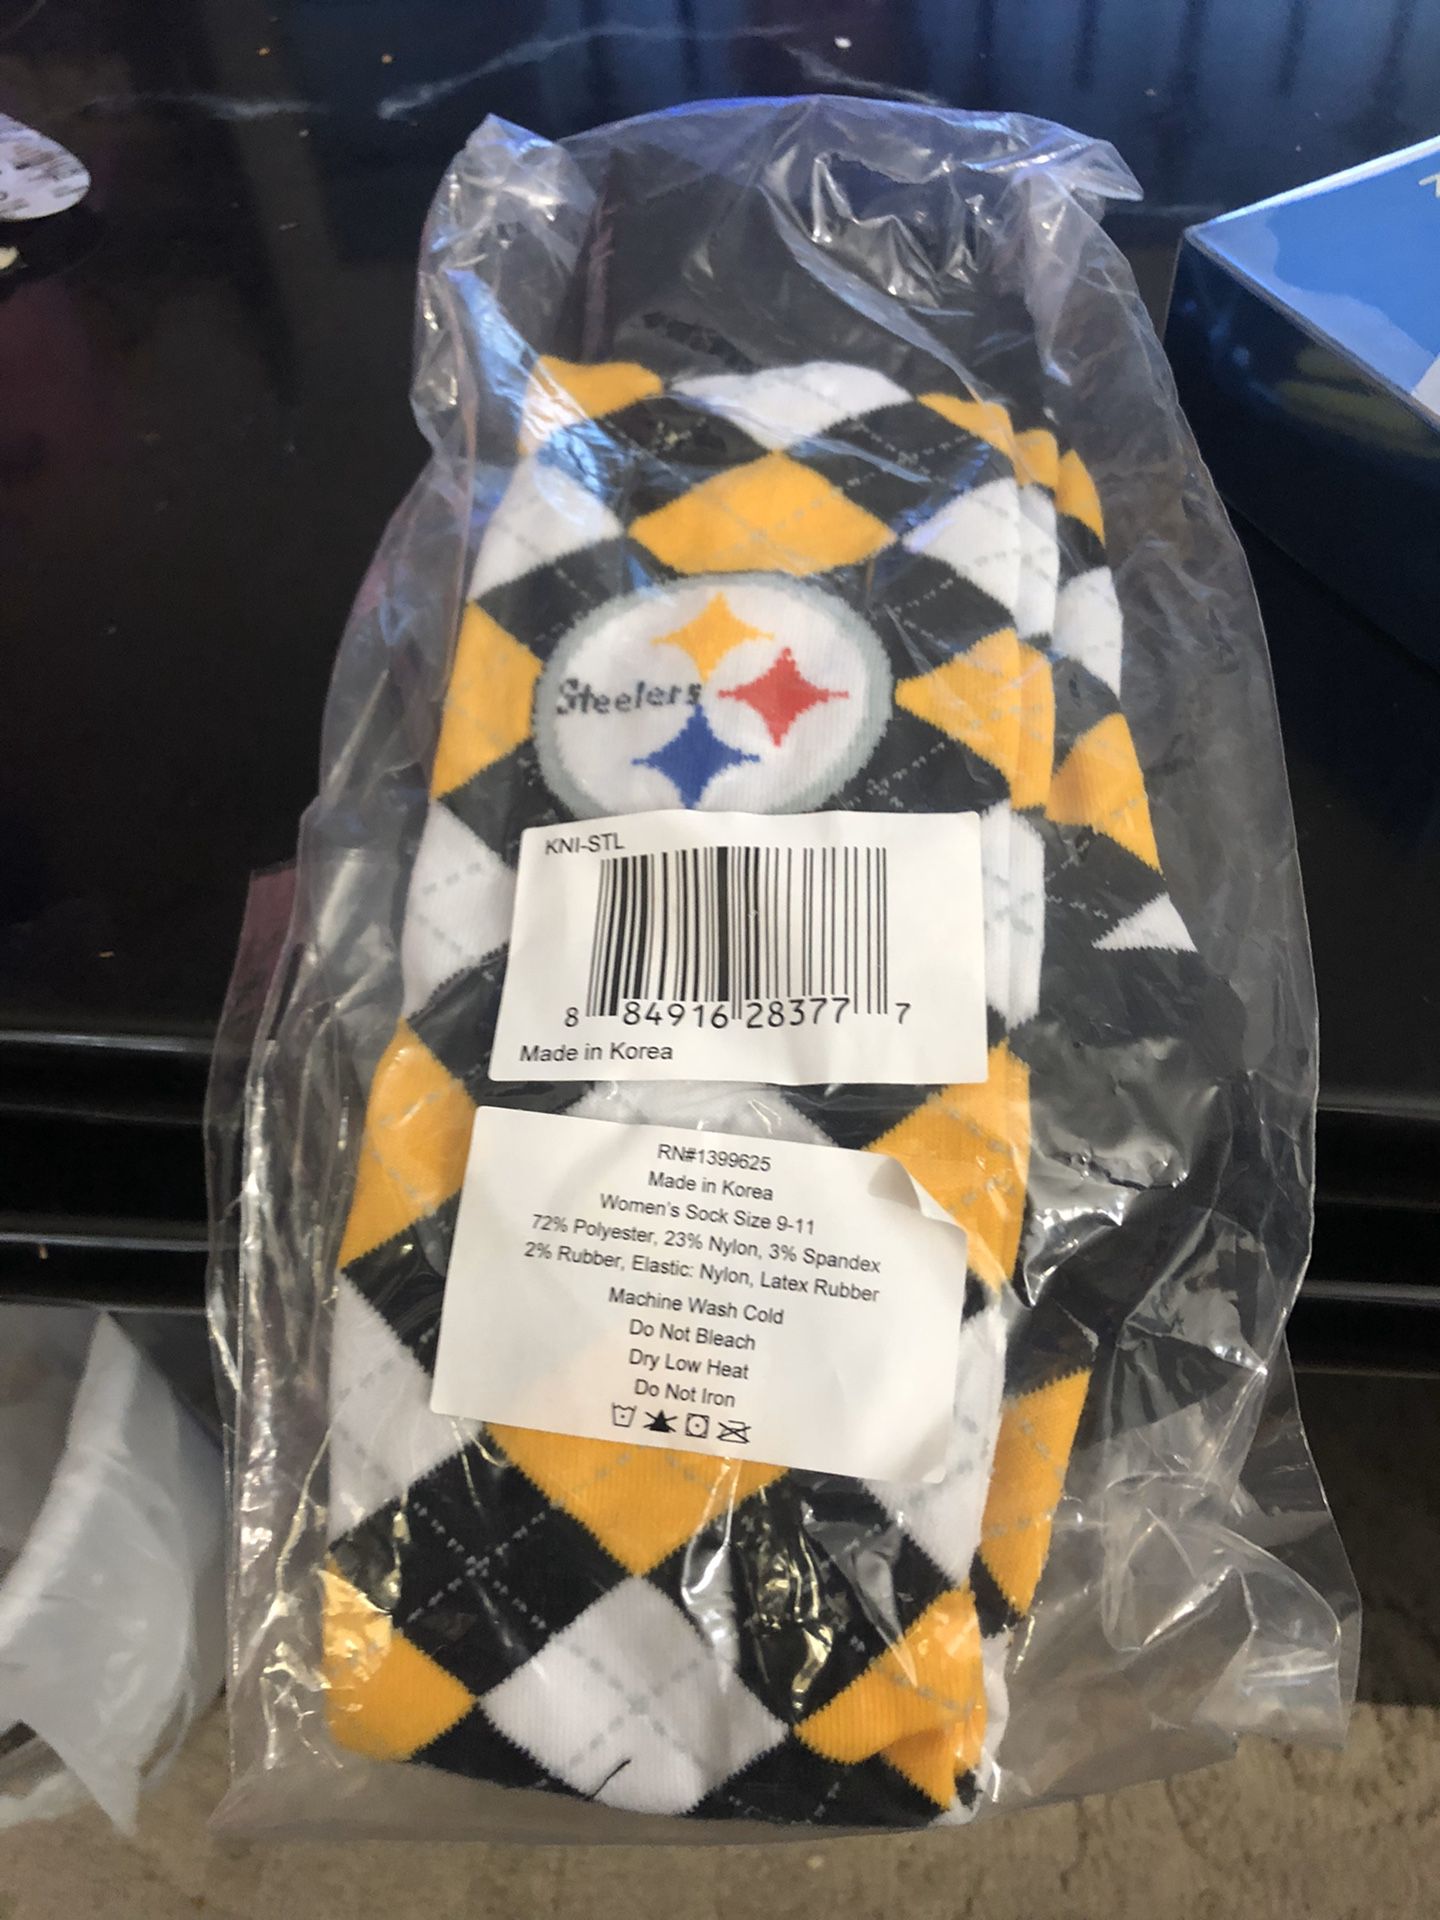 Steelers items: women sock, champ towel, 2 champ hats, lunch bag, zippo lighter